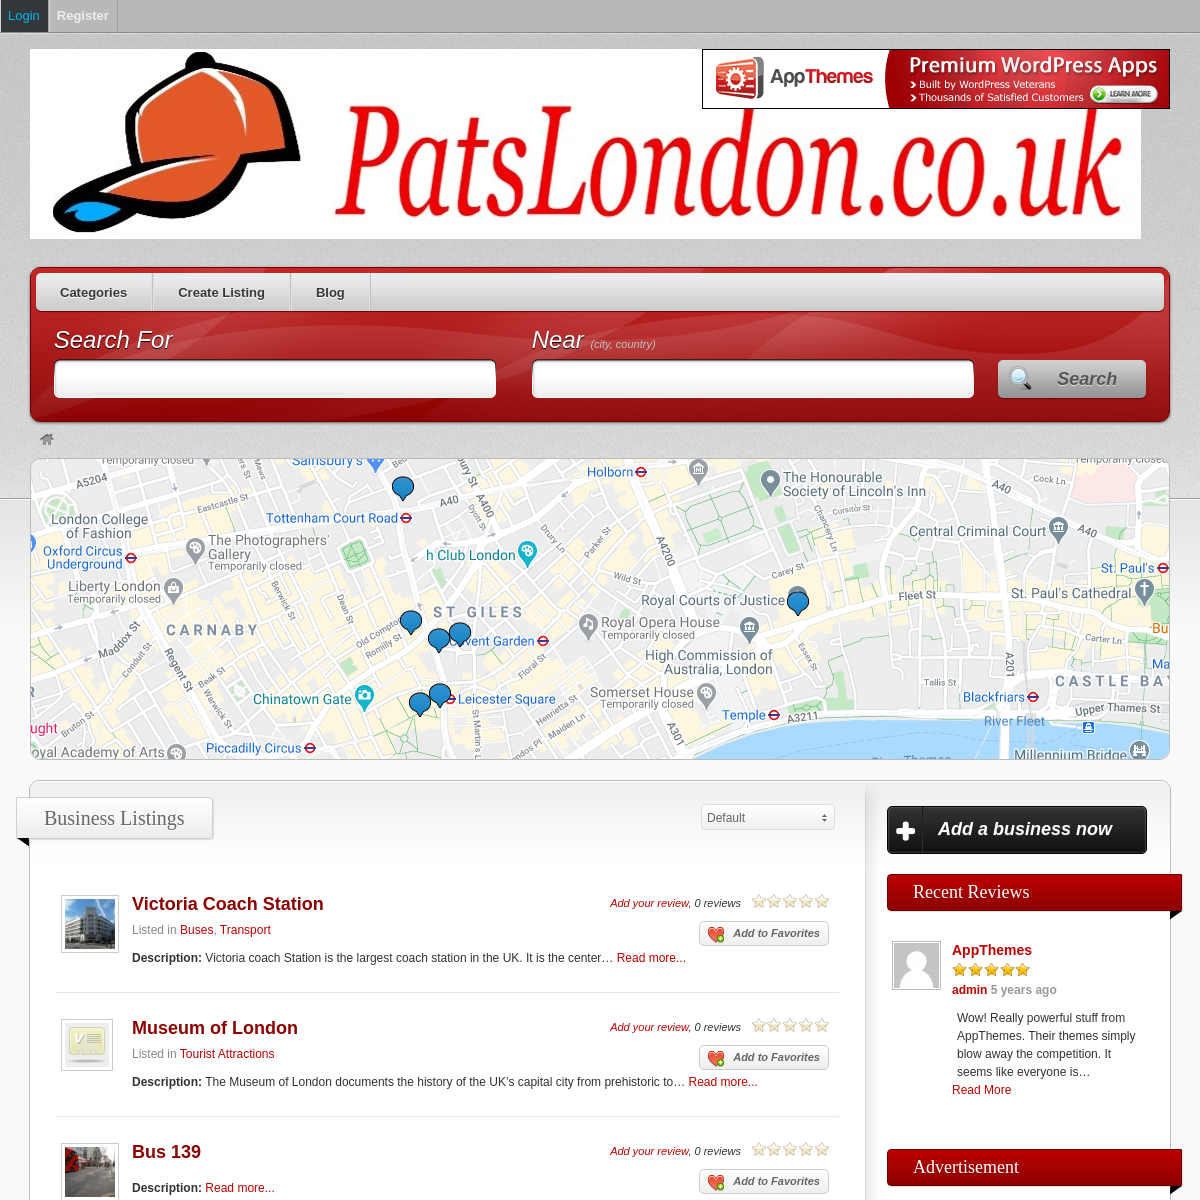 A complete backup of patslondon.co.uk